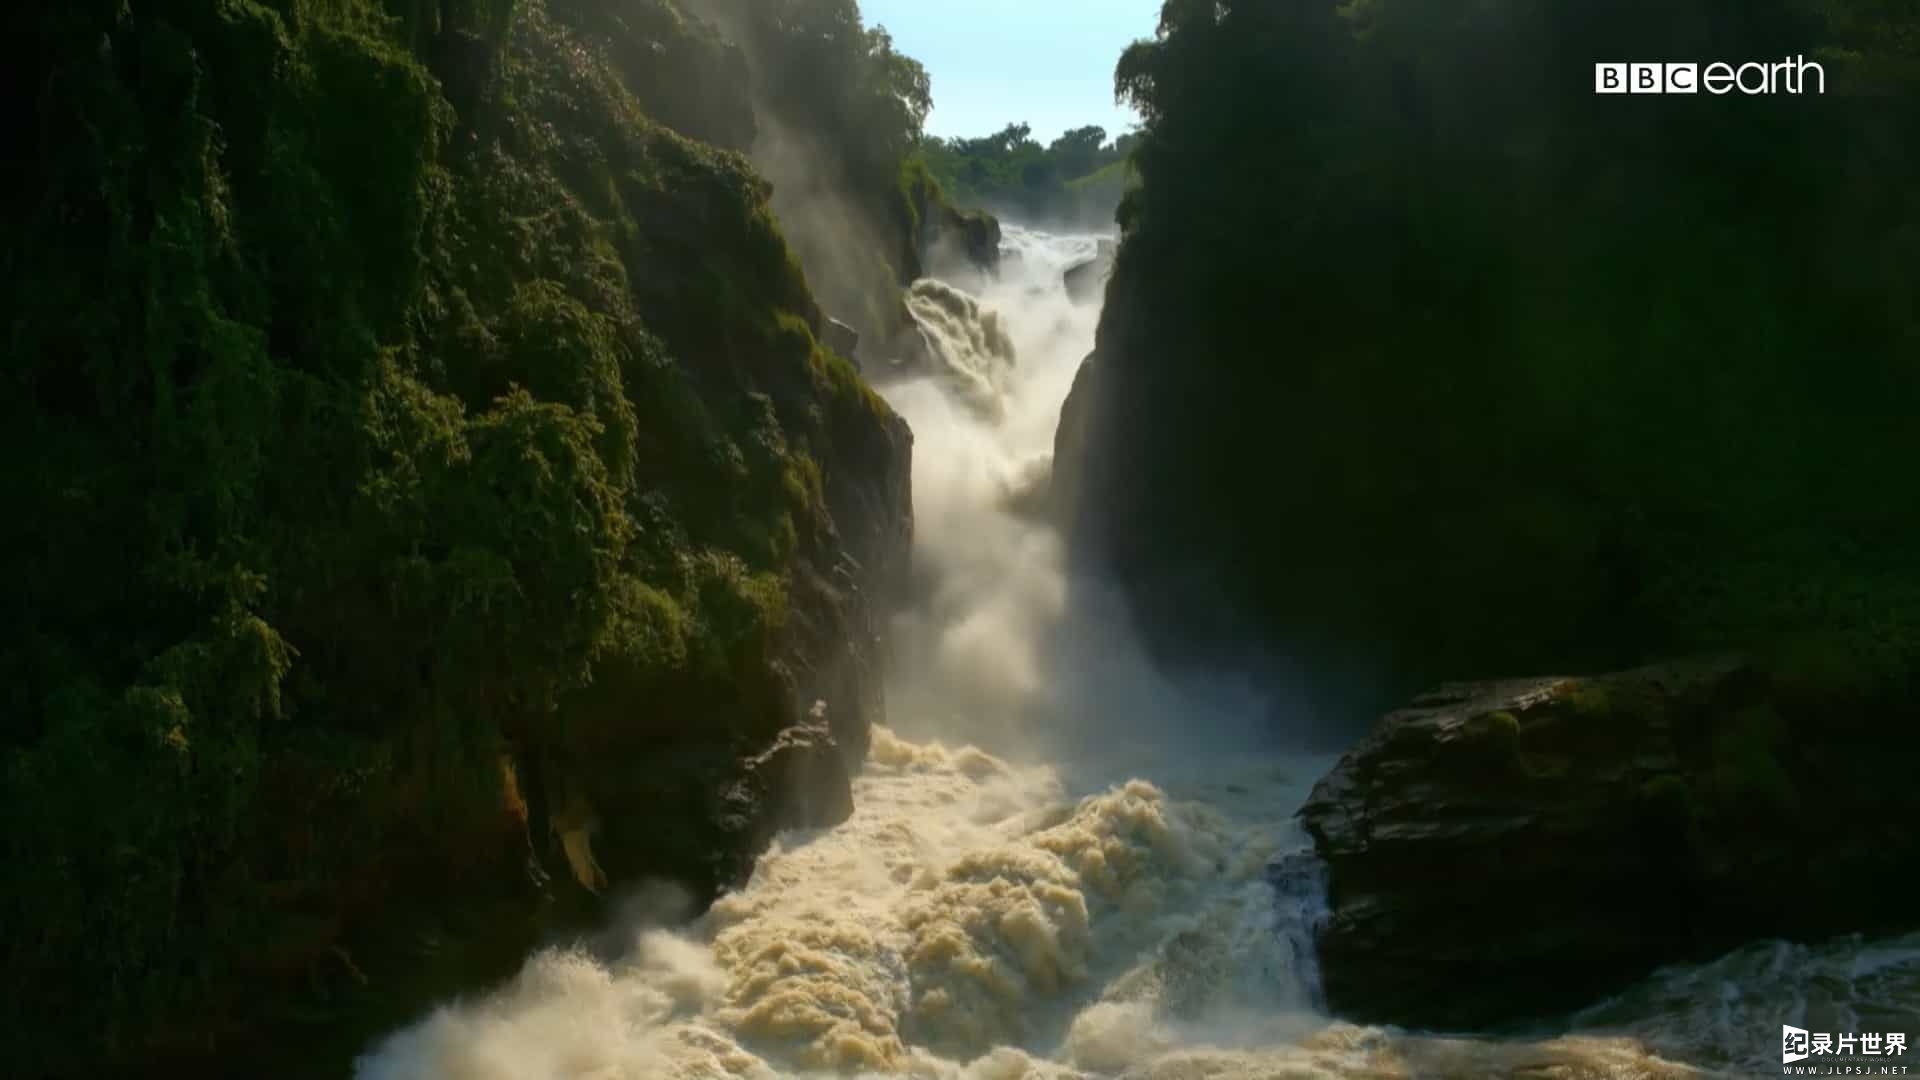 BBC纪录片《地球大河系列/地球壮观河流之旅 Earth's Great Rivers 2019》第1季